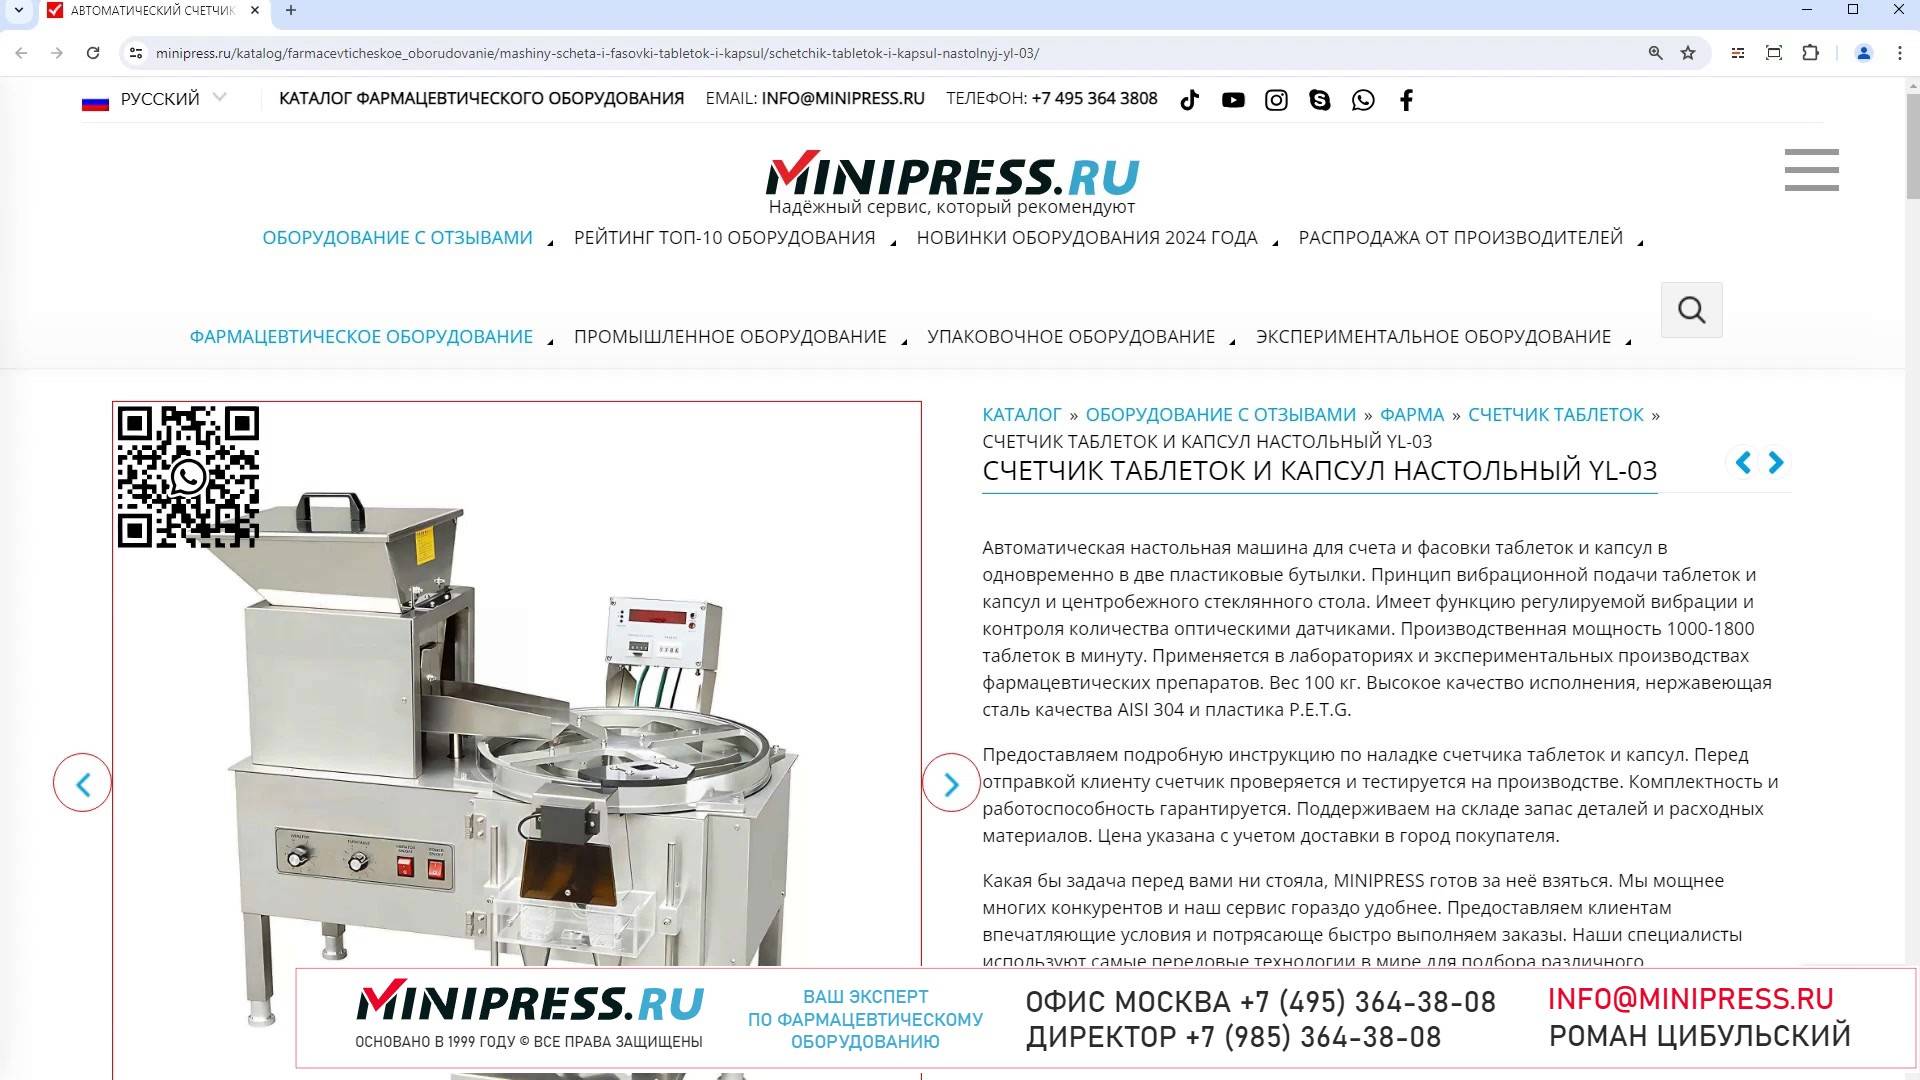 Minipress.ru Счетчик таблеток и капсул настольный YL-03